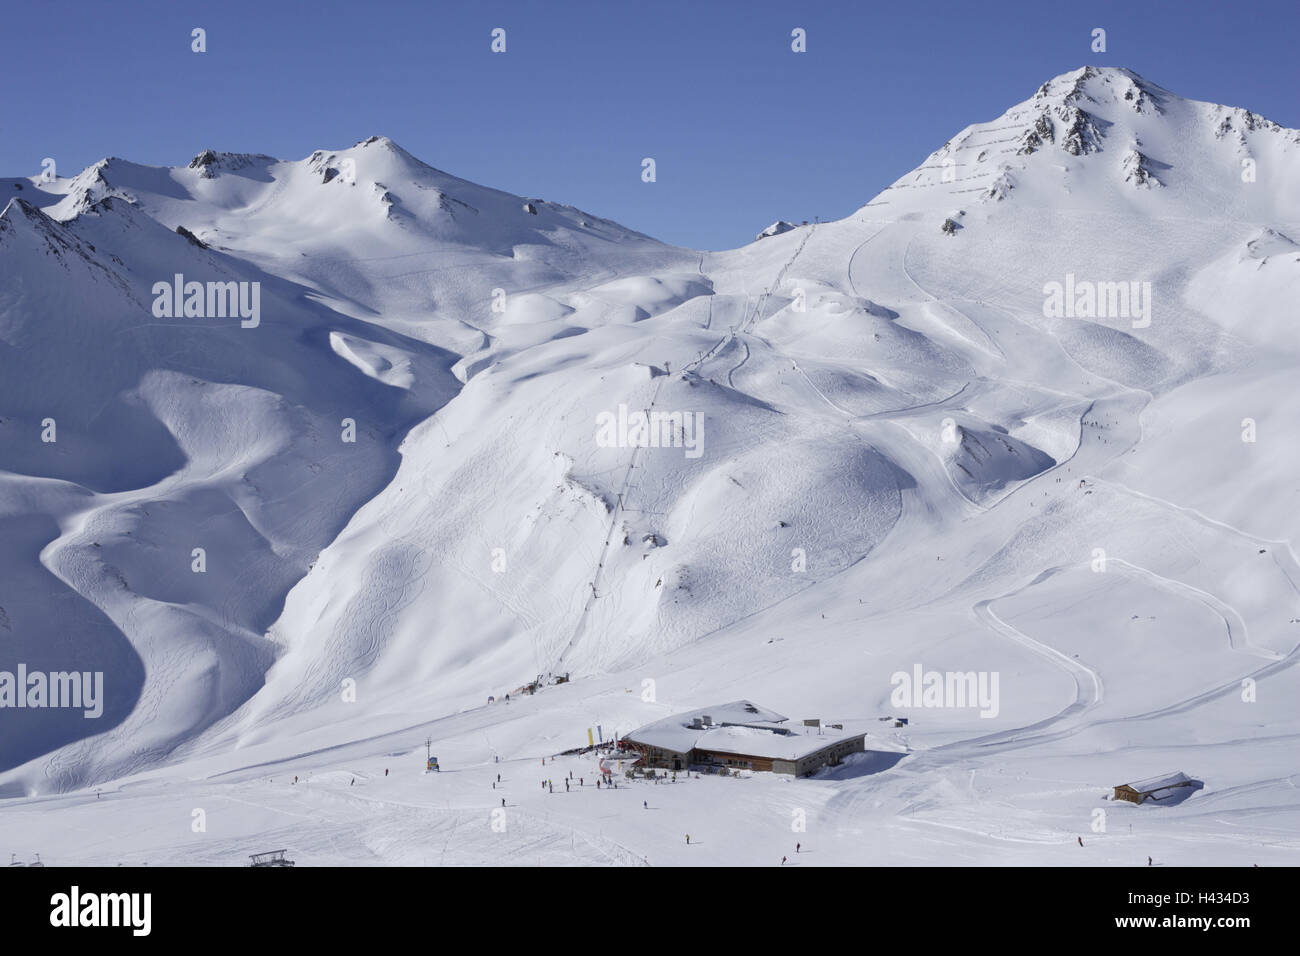 Austria, Tyrol, Serfaus-Fiss-Ladis, skiing area, mountain ...